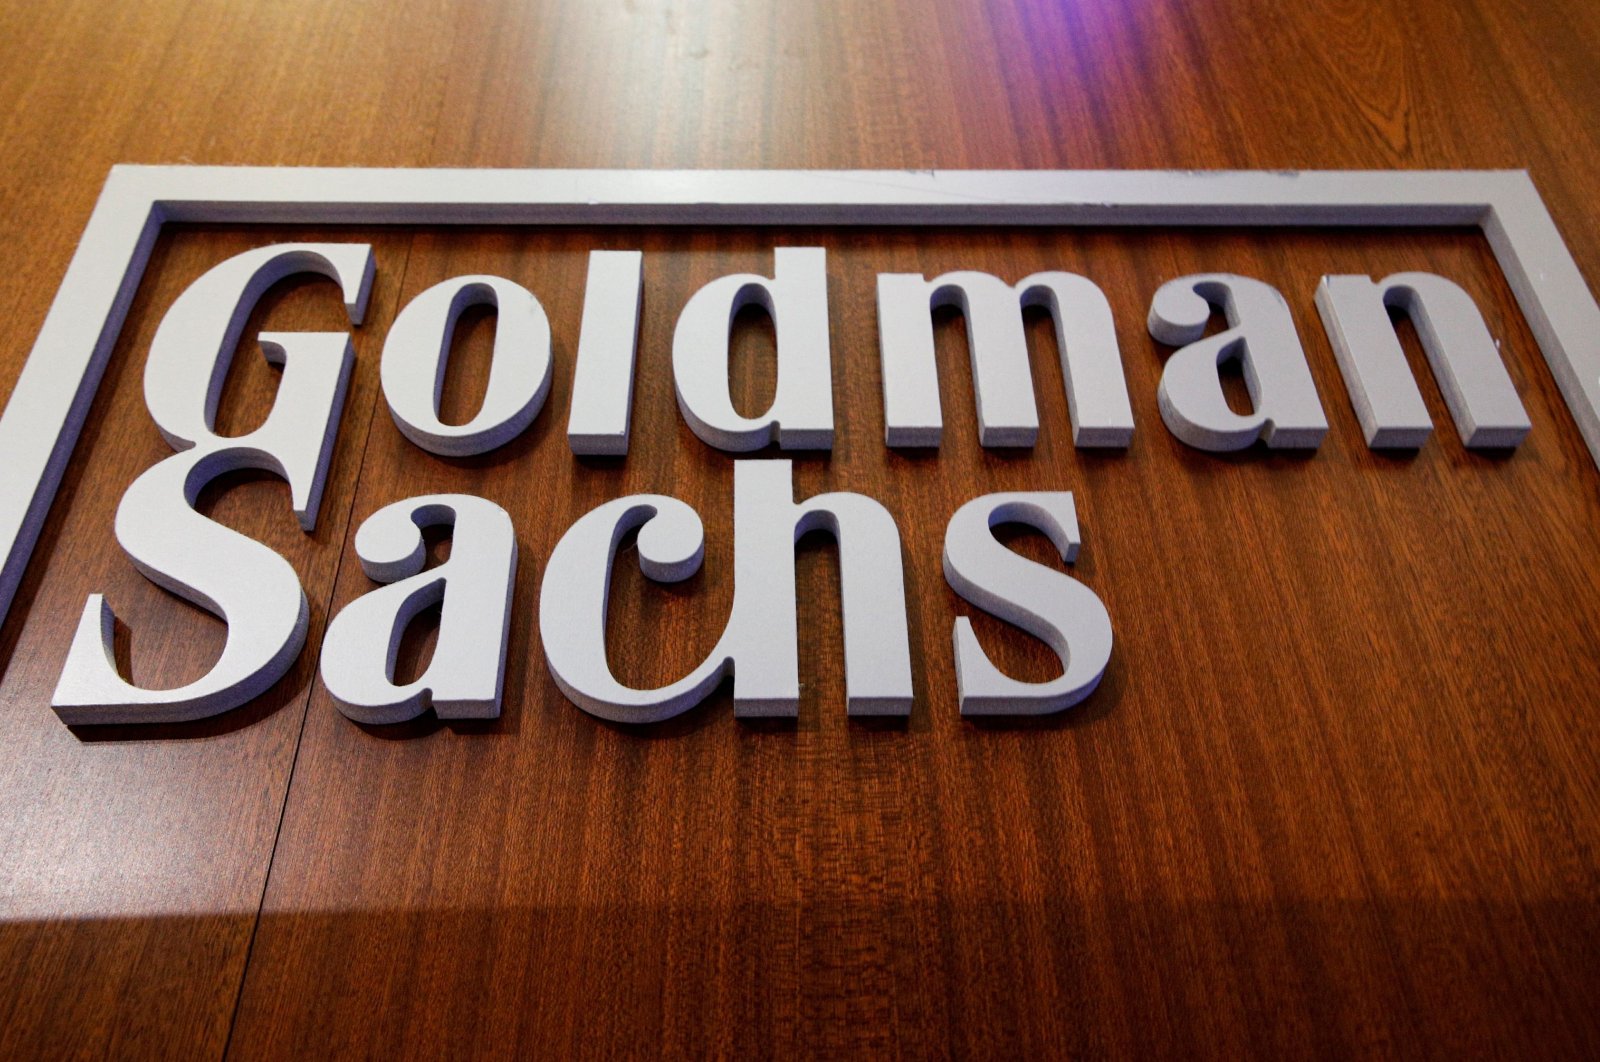 Goldman Sachs keluar dari Rusia sebagai bank besar pertama di Wall St yang keluar